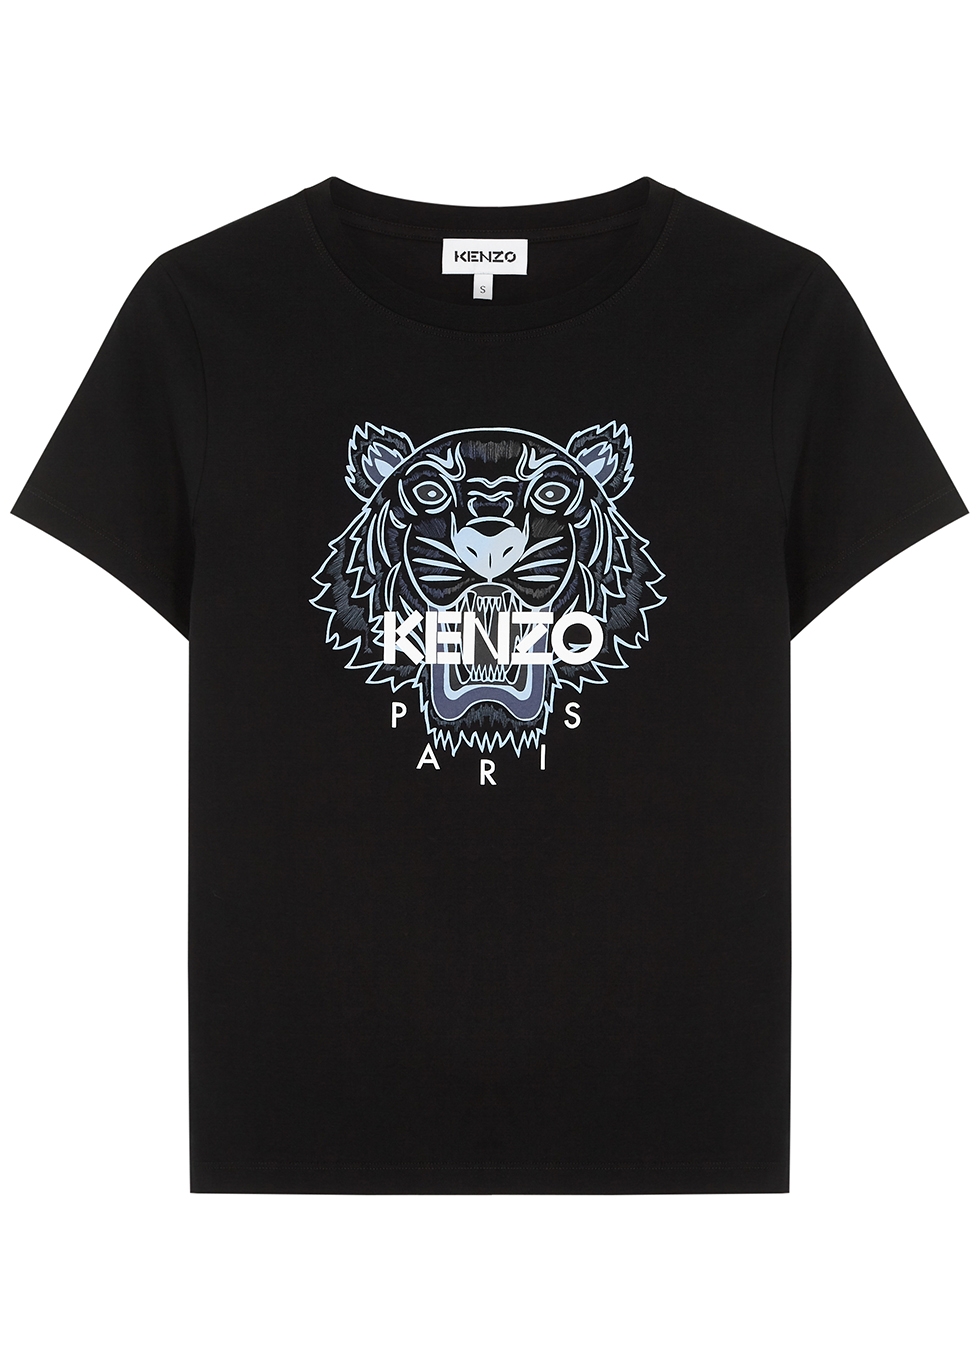 real kenzo t shirt